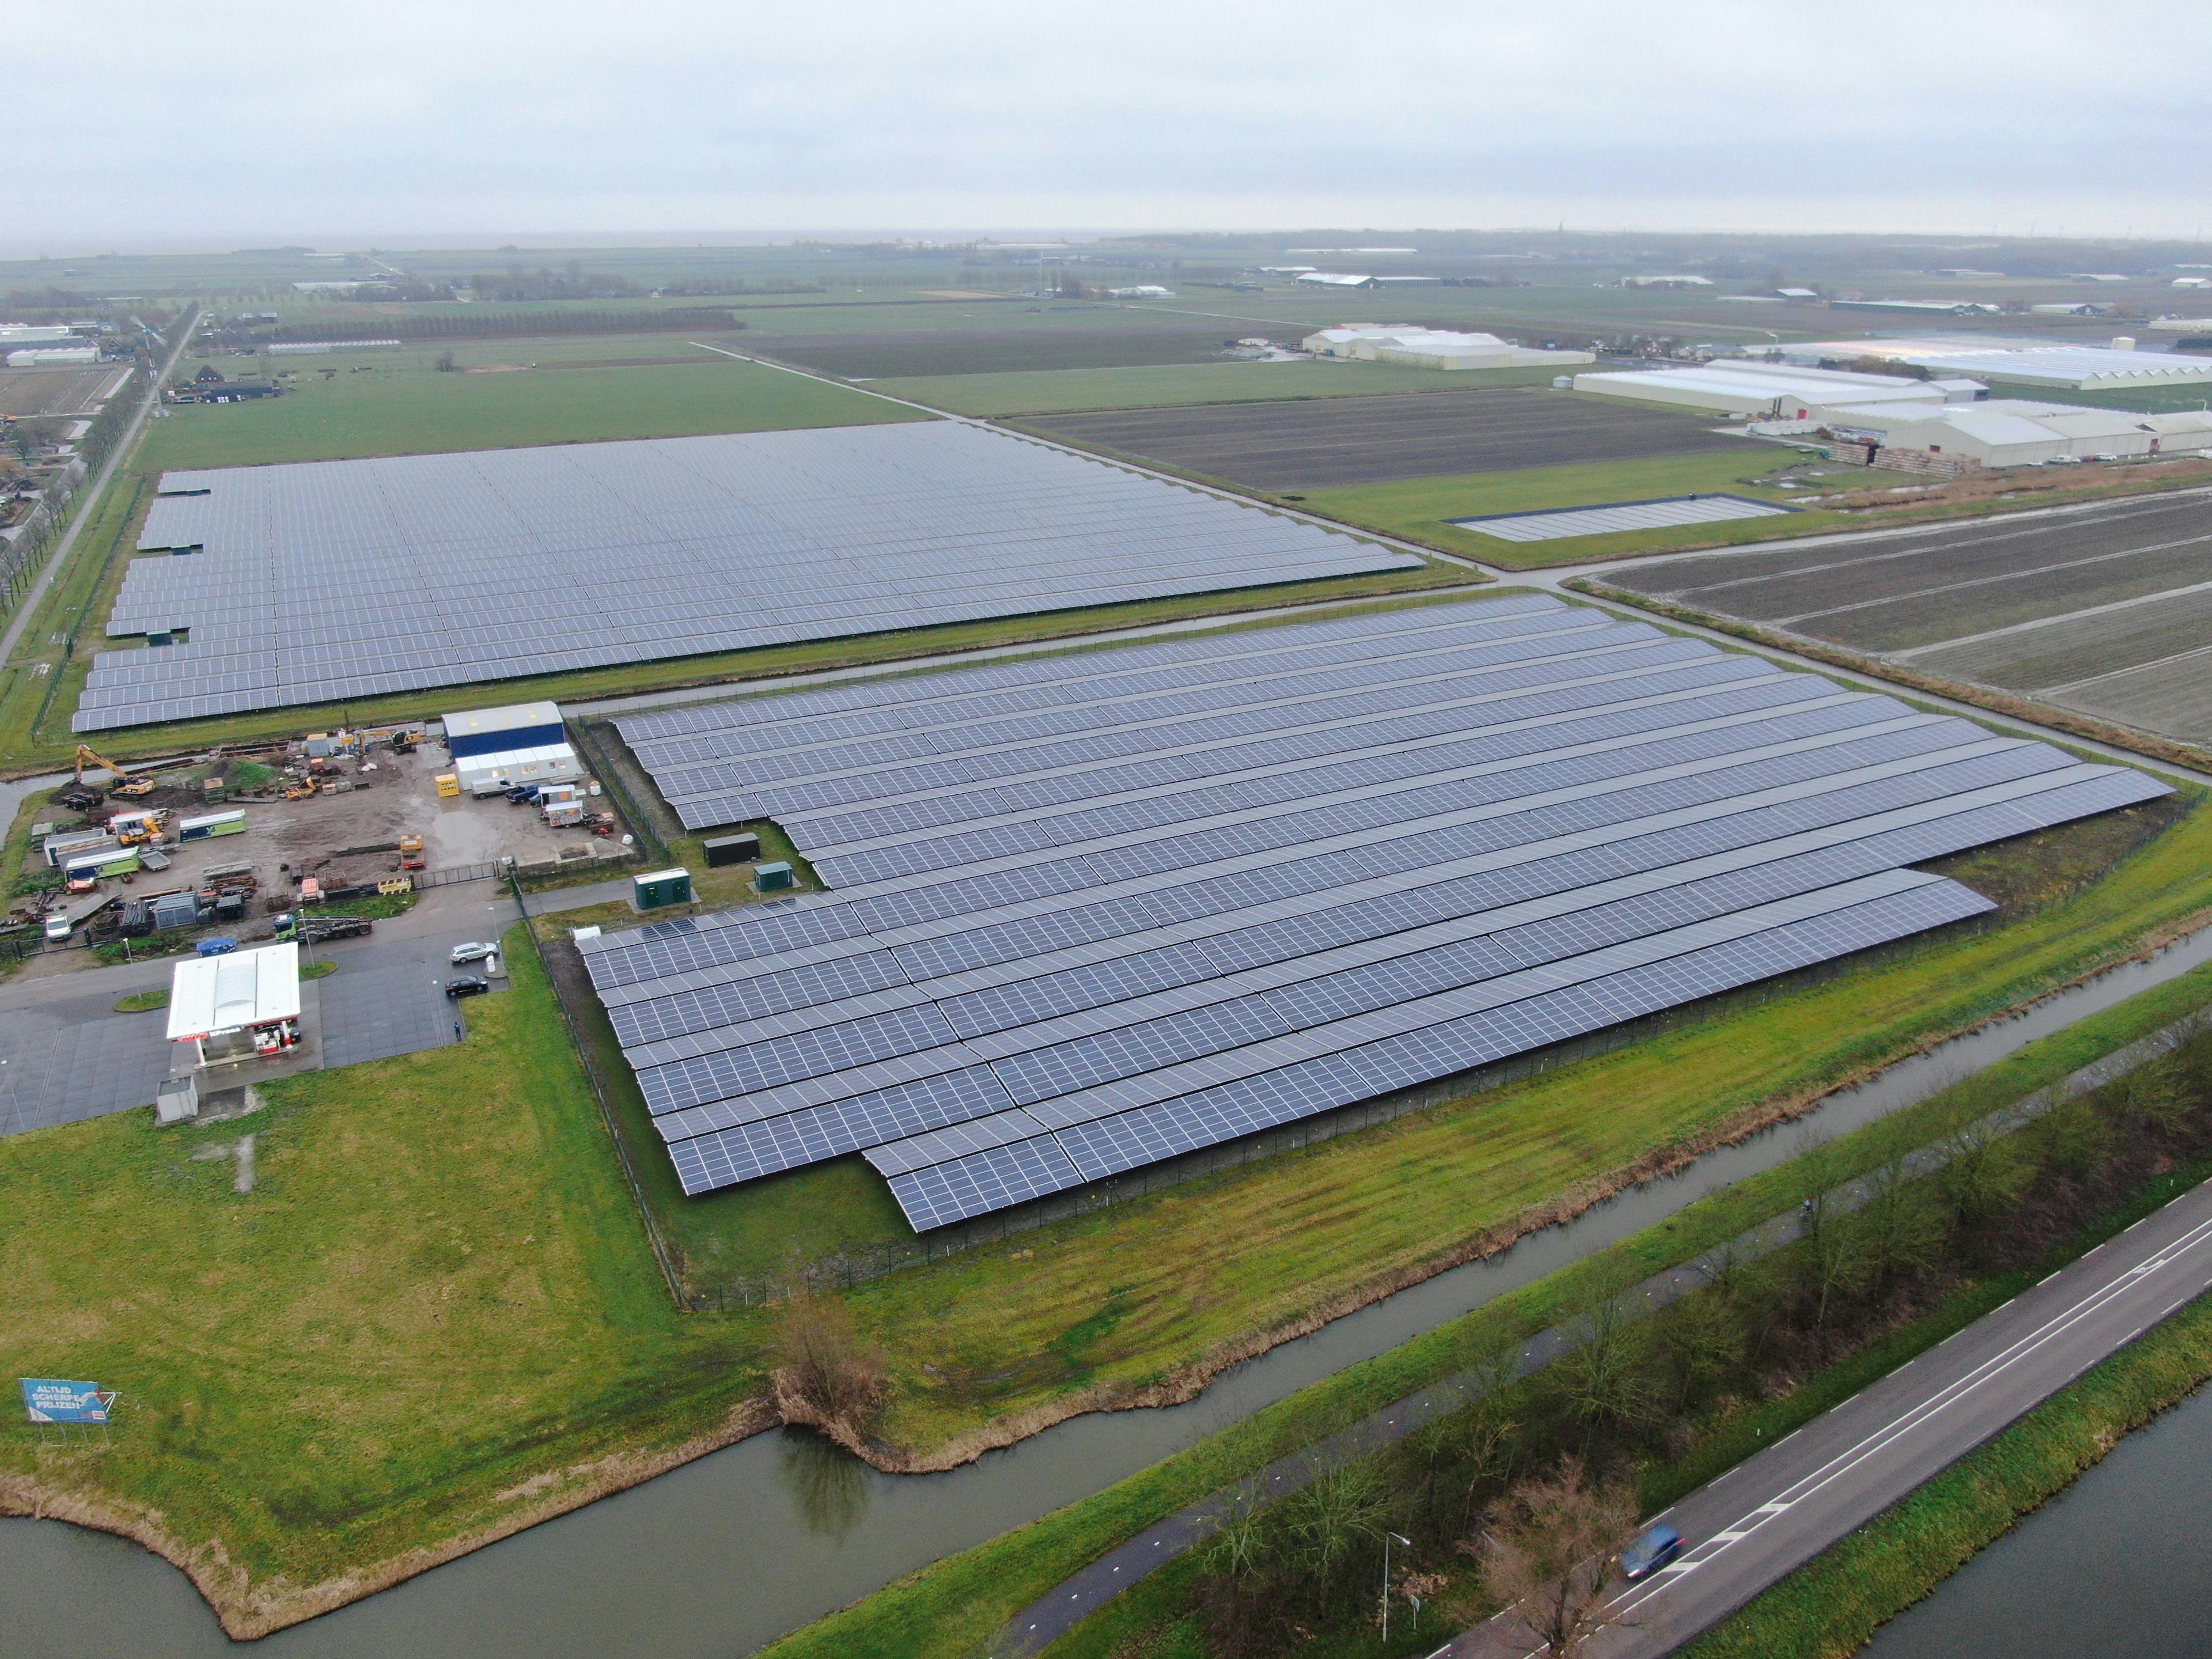 Andijk freefield project in the Netherlands taken by drone